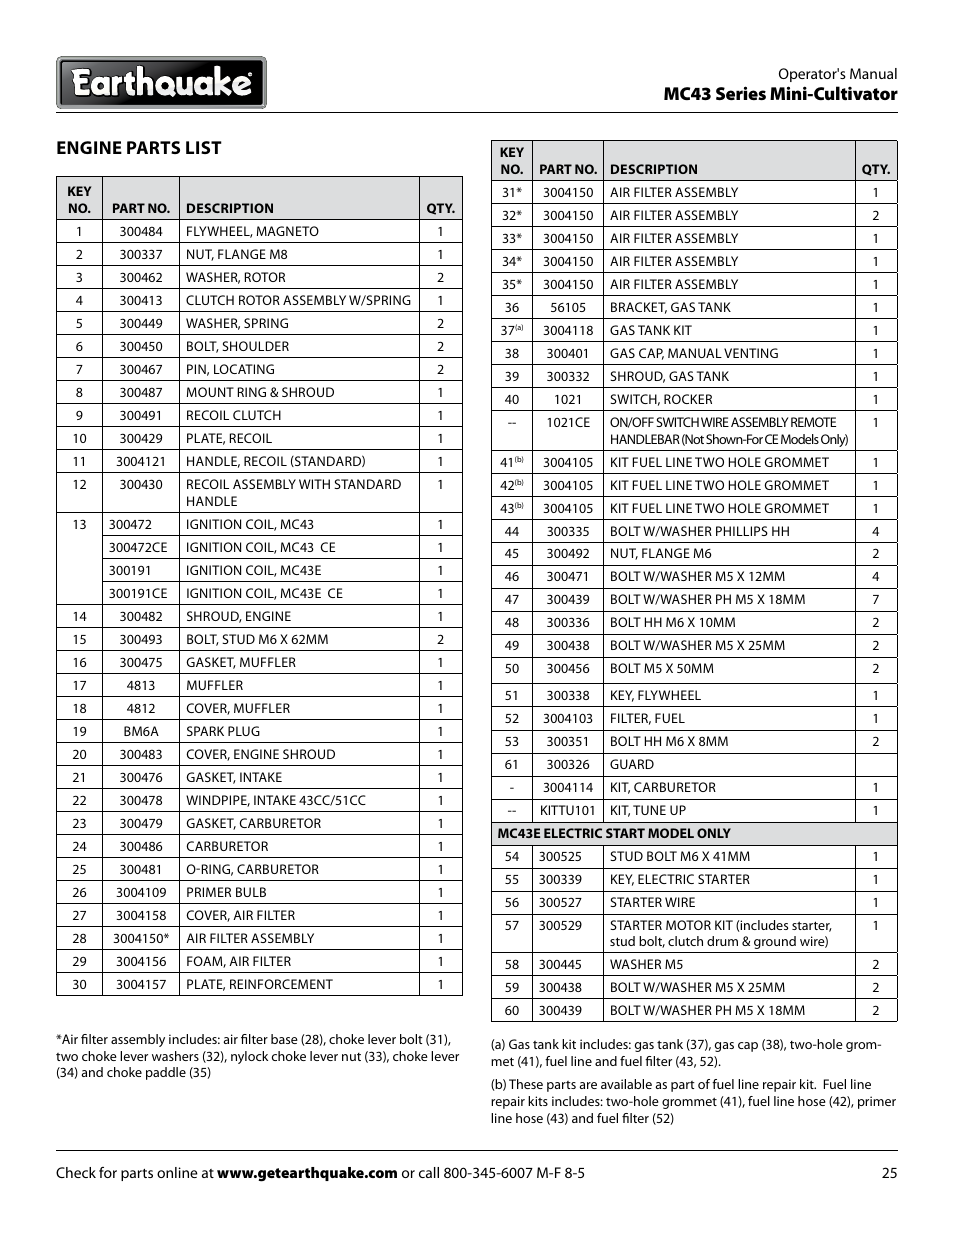 Mc43 series mini-cultivator, Engine parts list | EarthQuake MC43E User